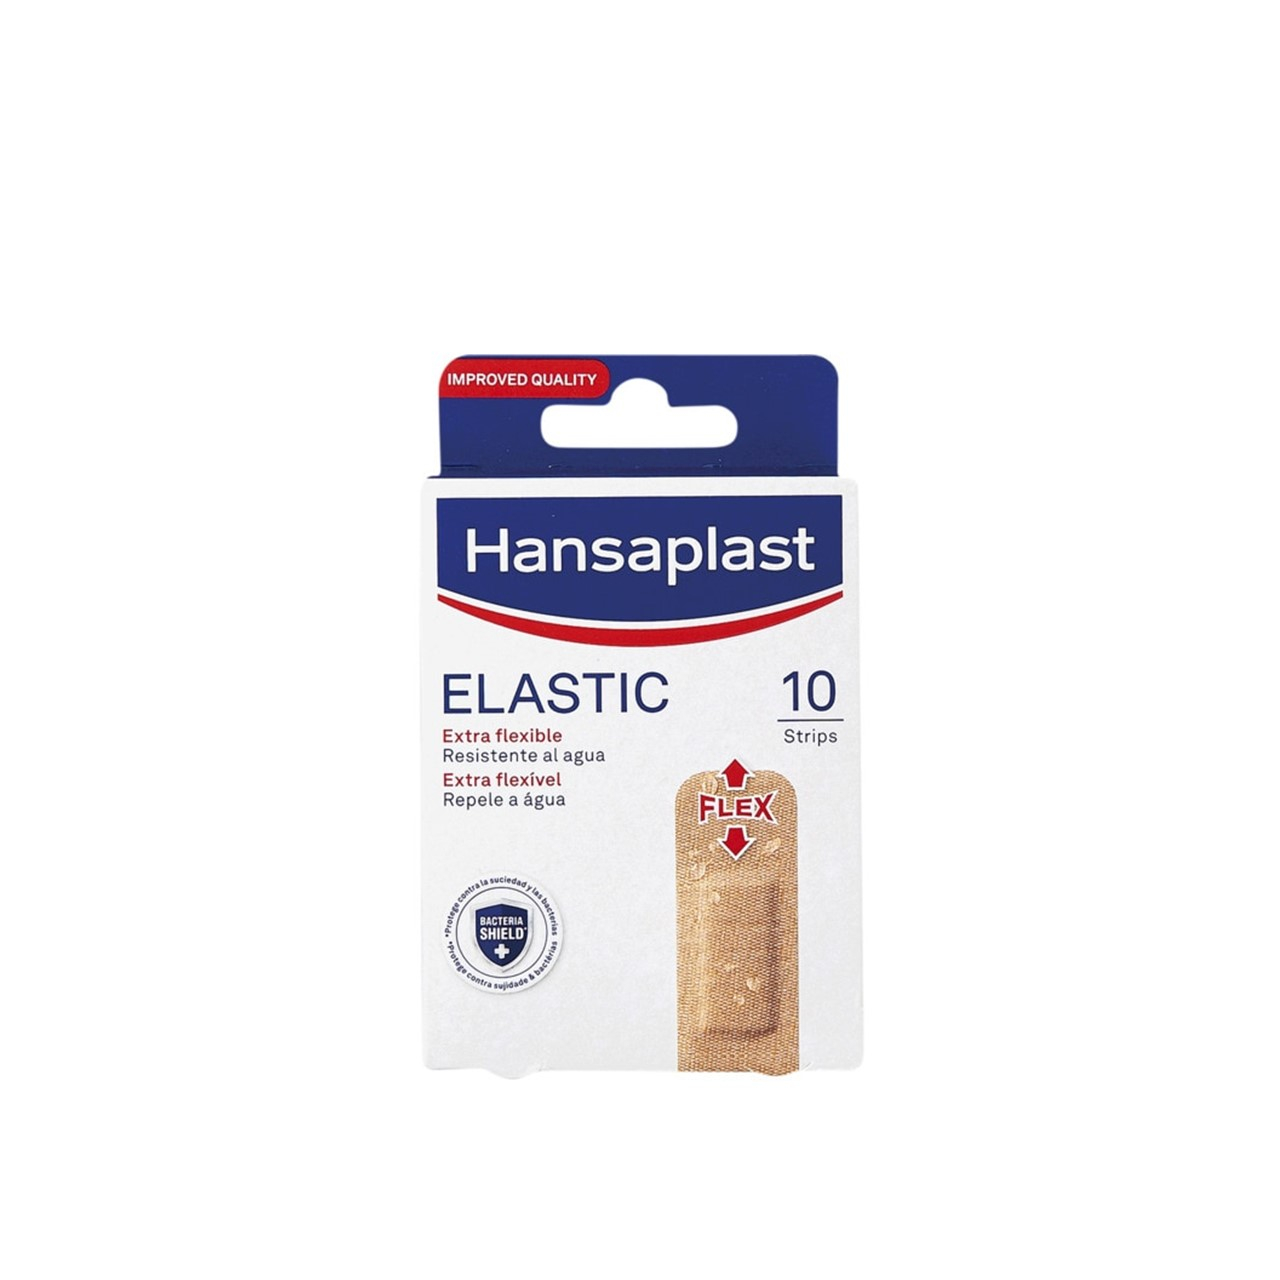 Hansaplast Elastic Extra Flexible Water Resistant Plasters